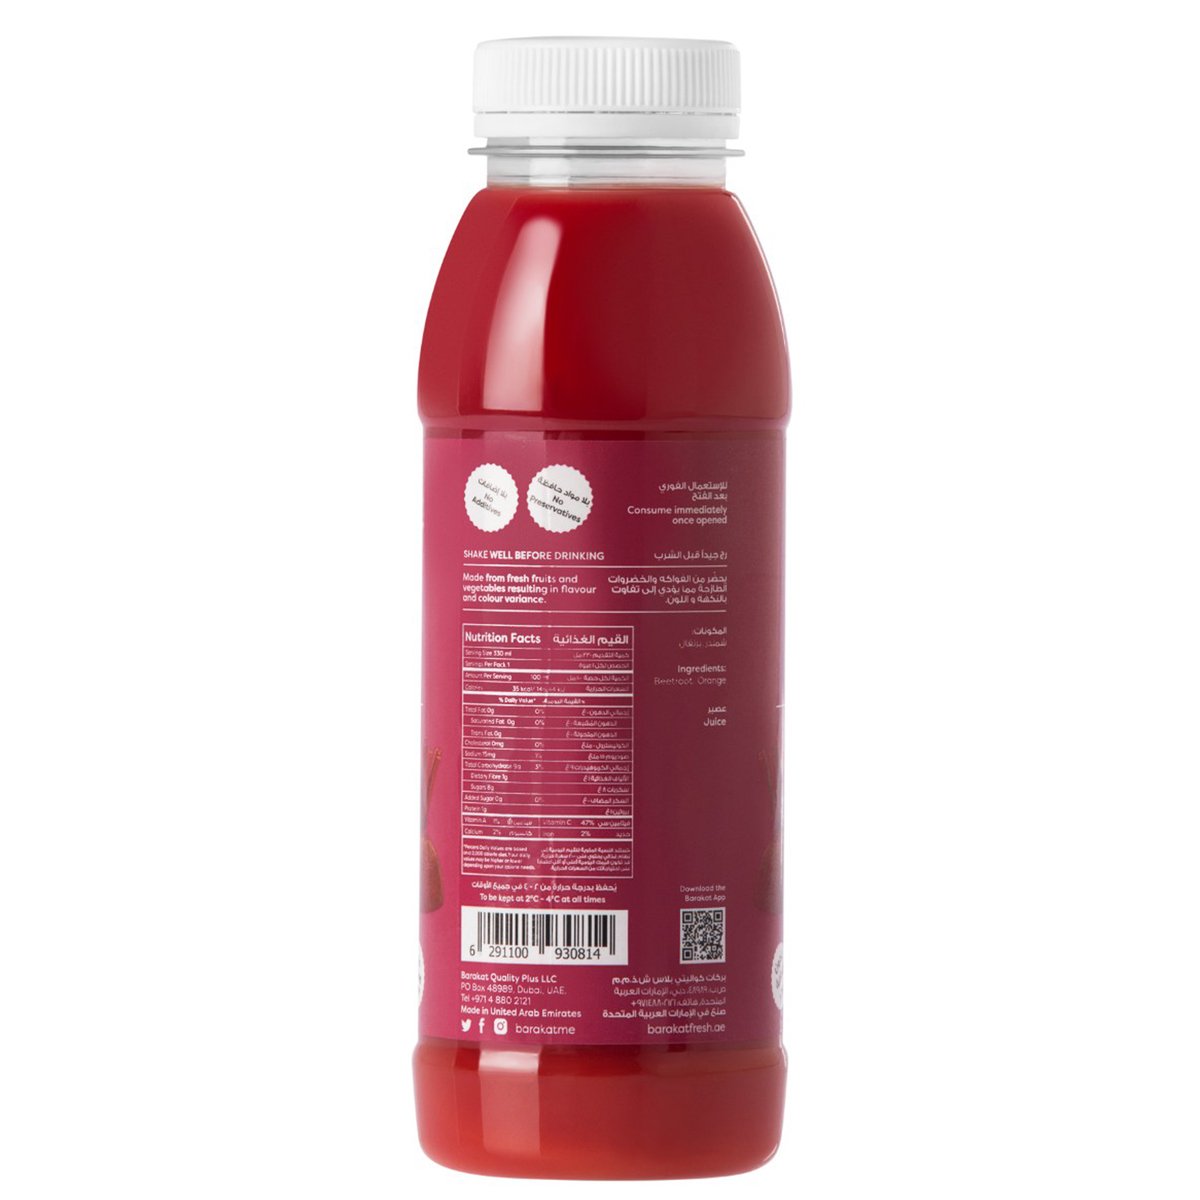 Barakat Beetroot & Orange Juice 330 ml